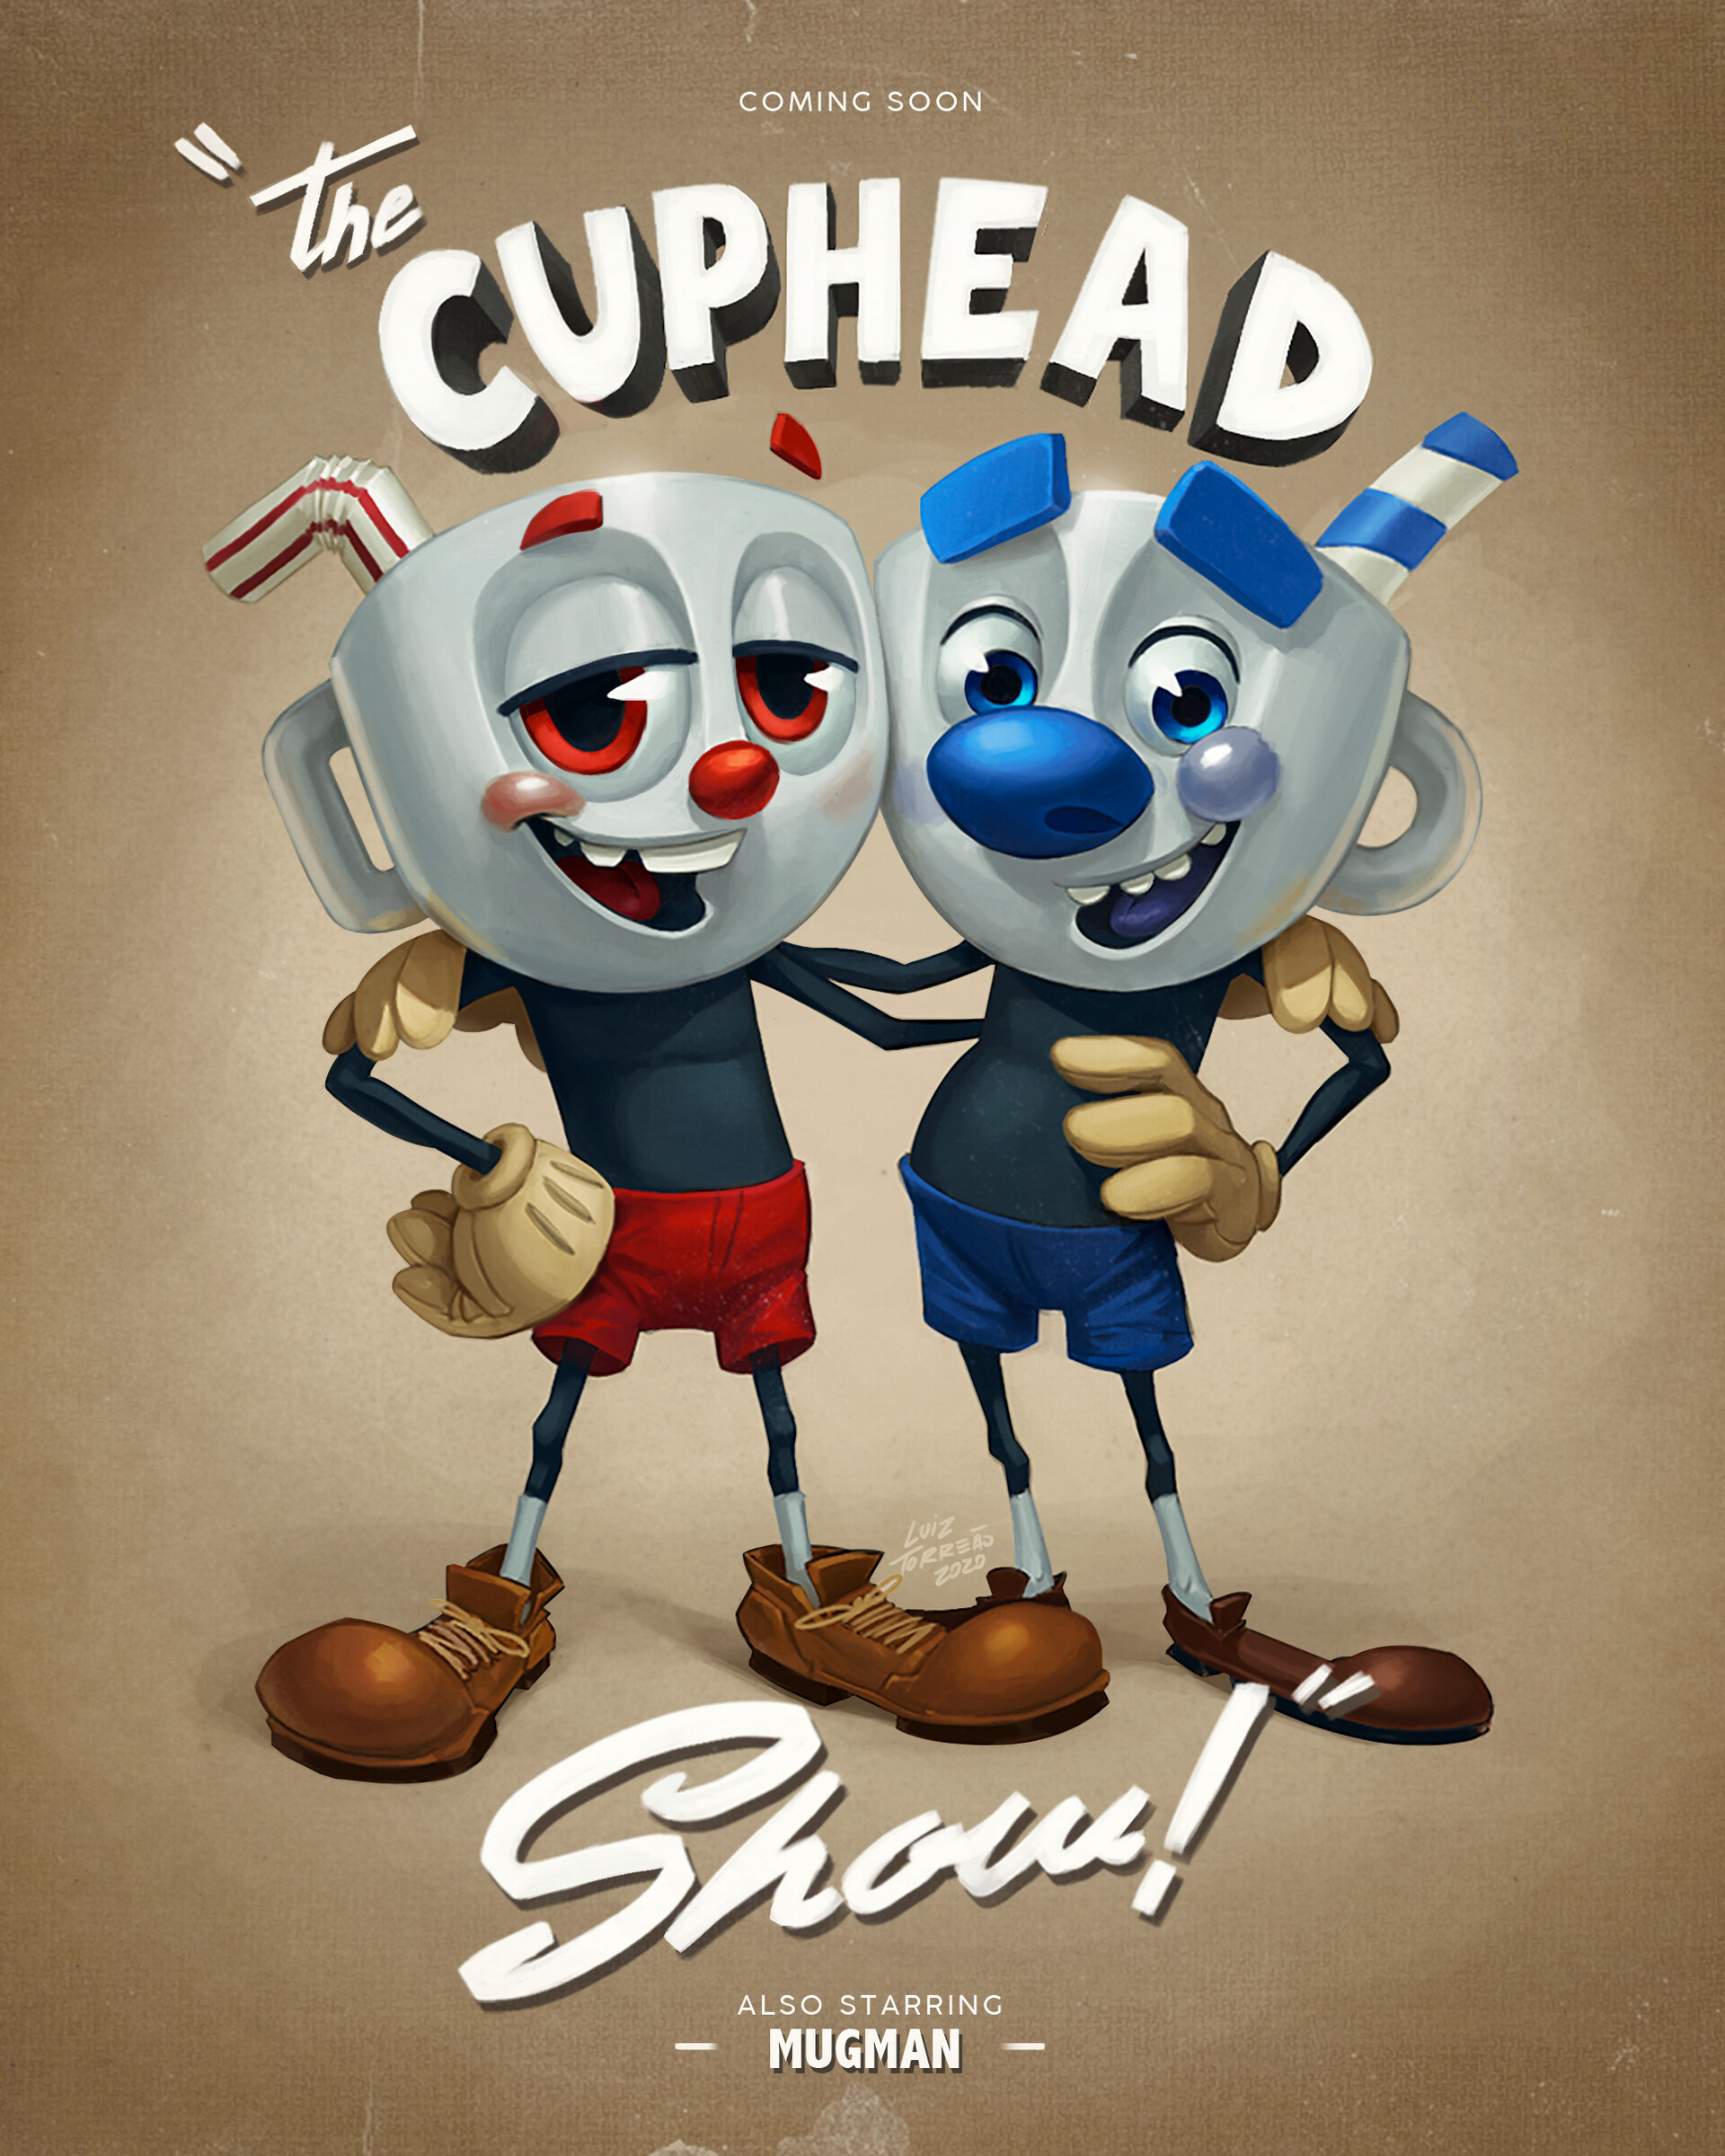 ArtStation - The Cuphead Show